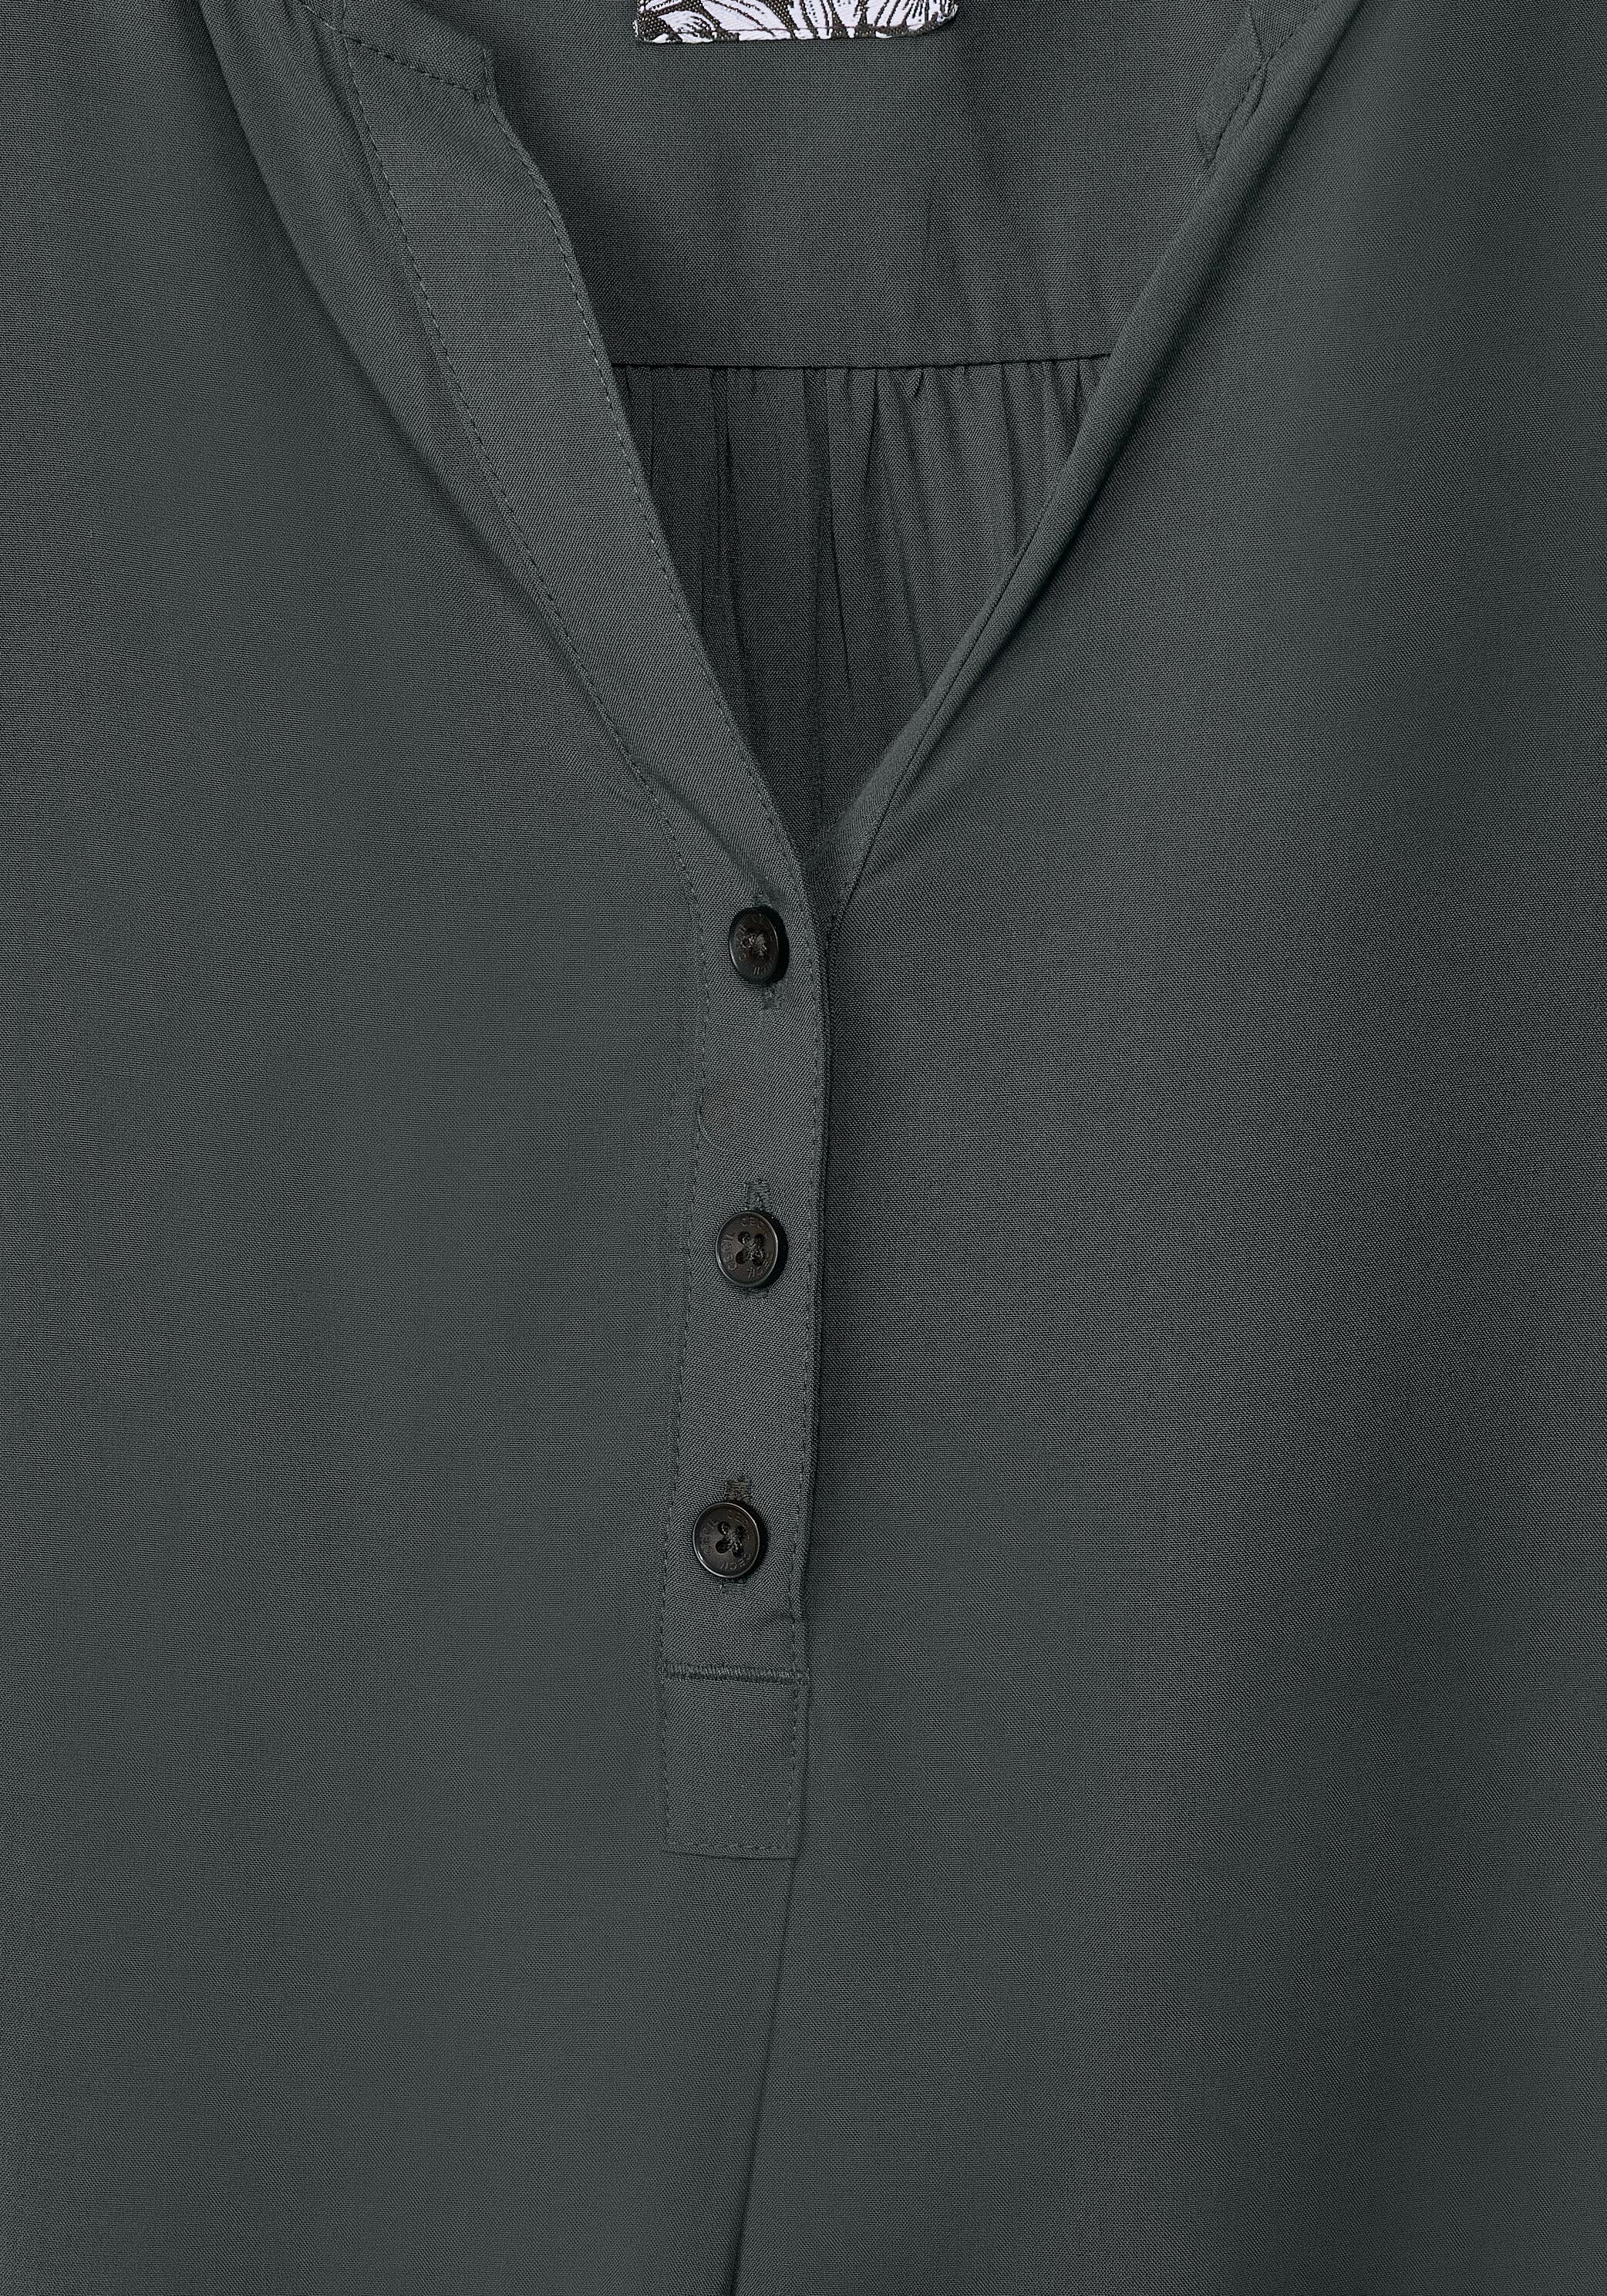 Shirtbluse easy mit Cecil Serafinoausschnitt khaki